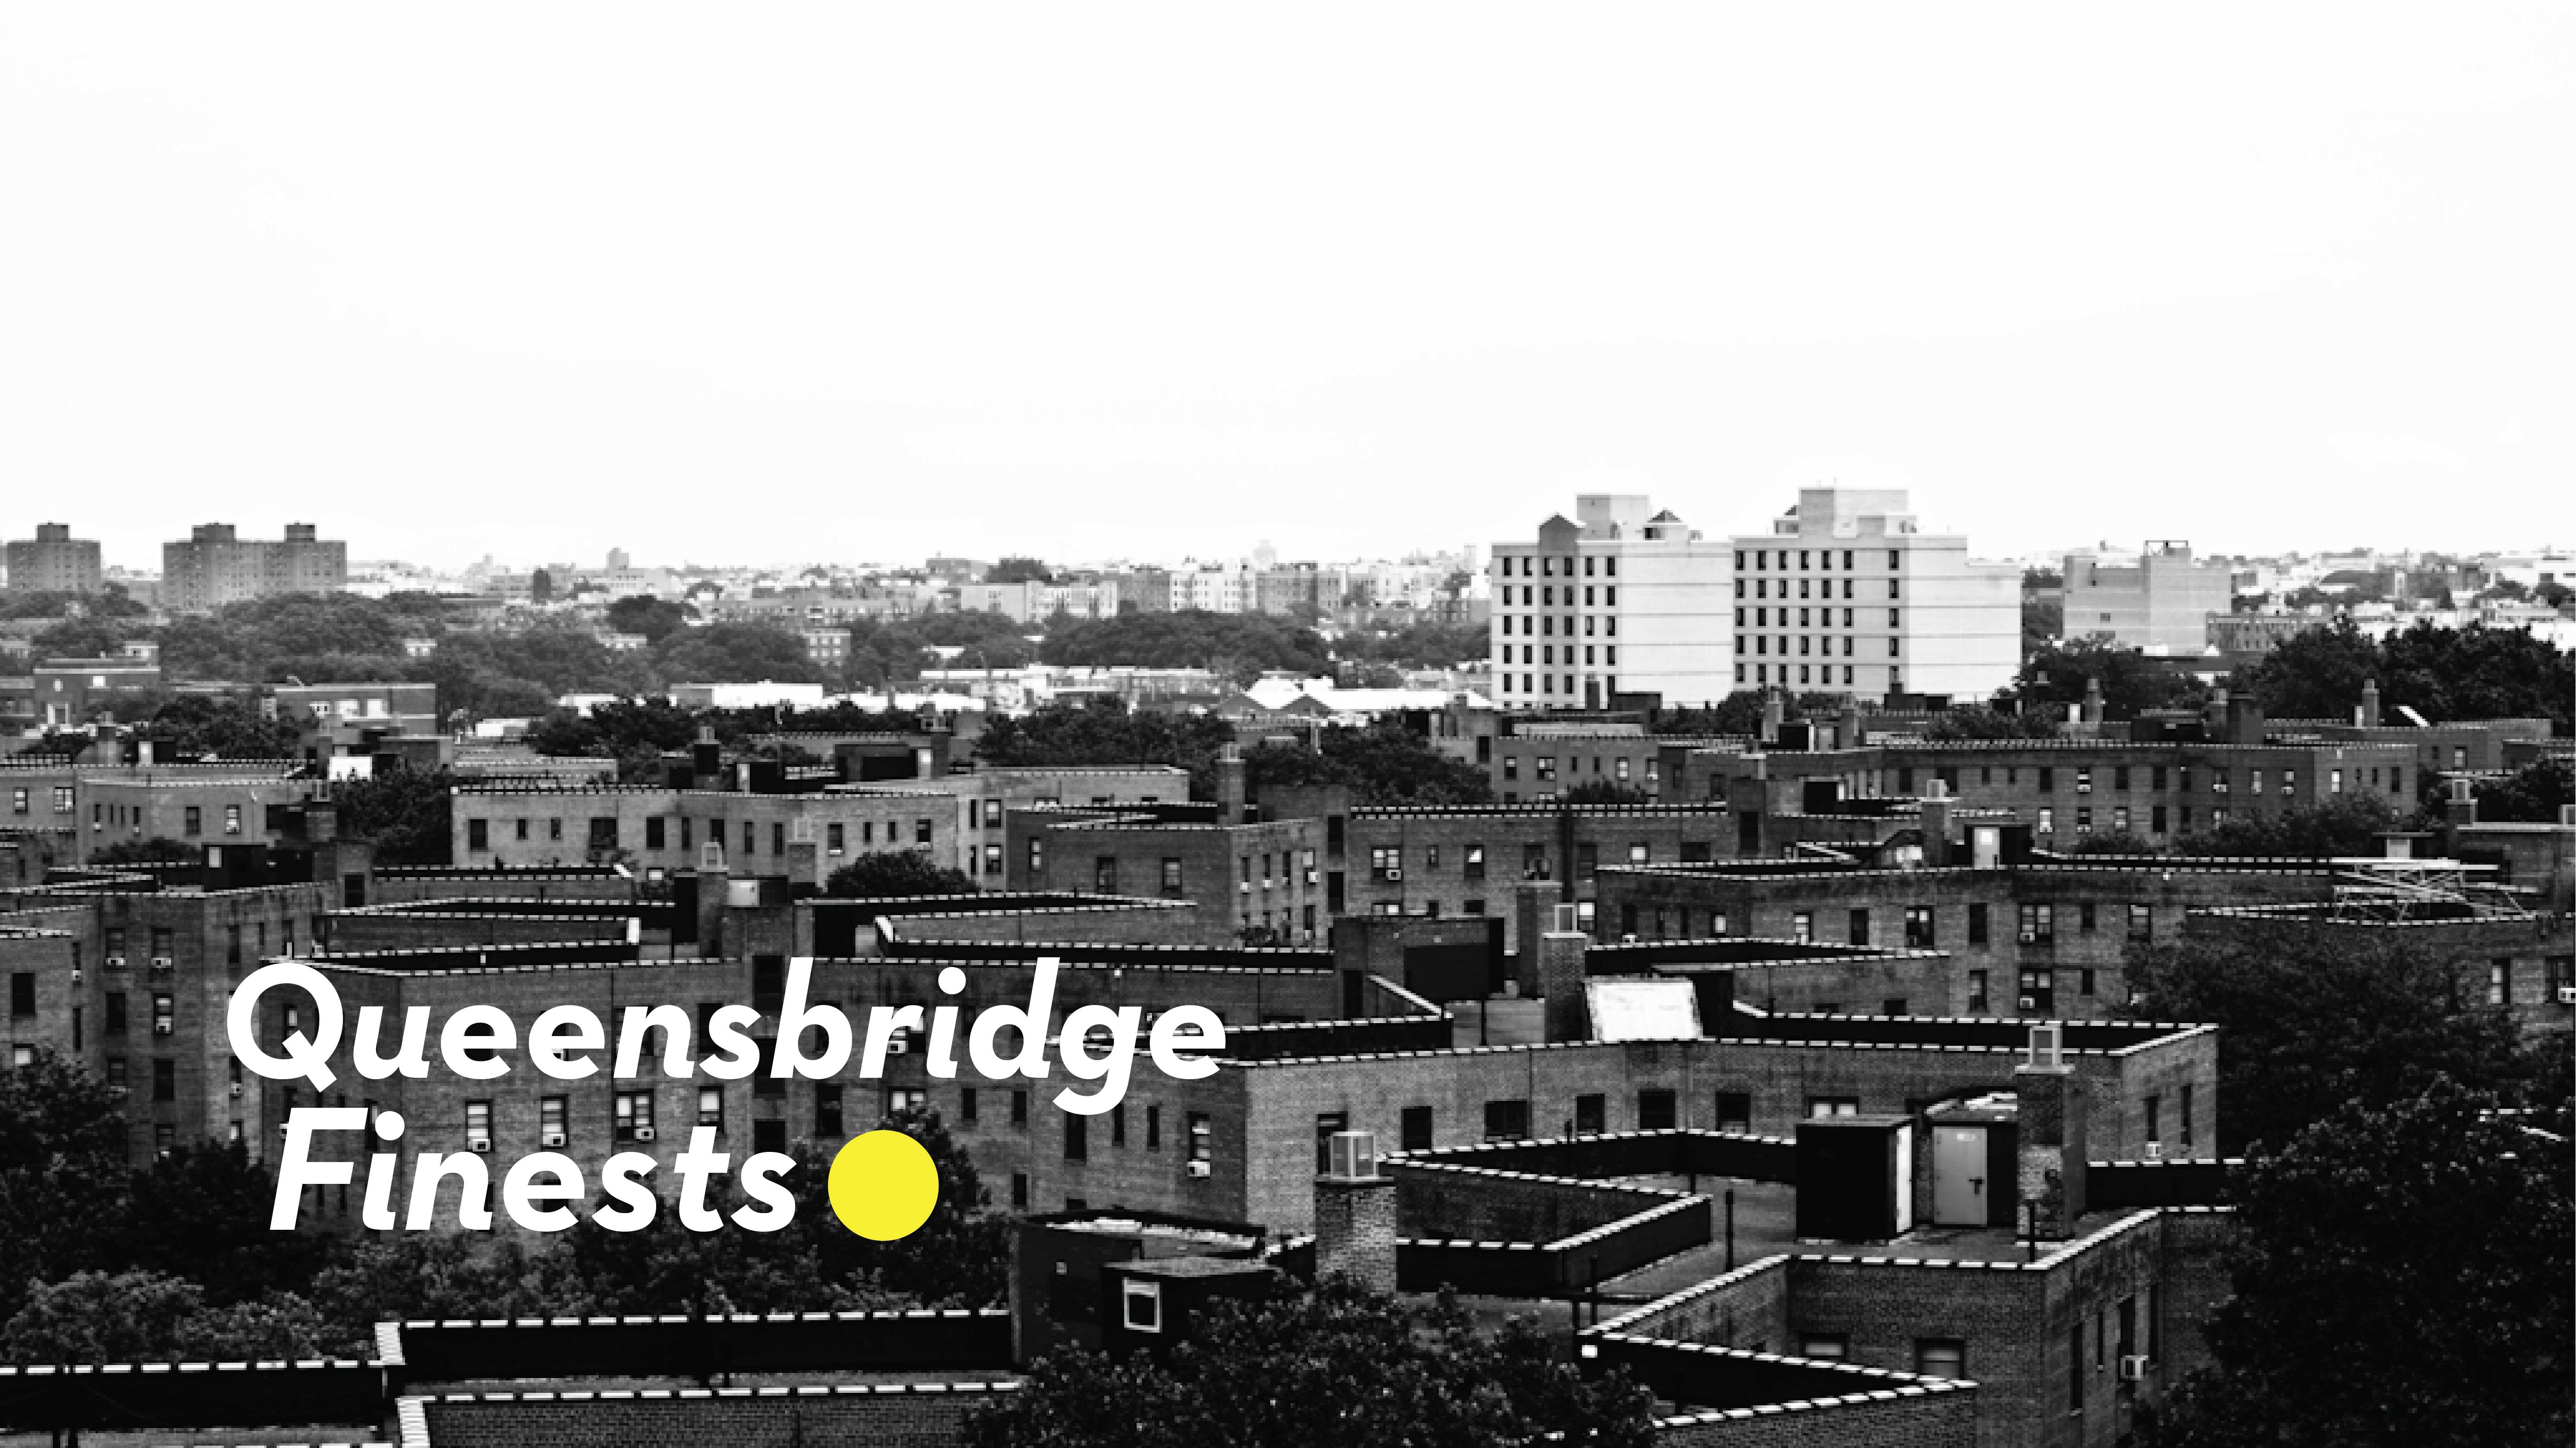 Queensbridge Finests. "Let me take a trip on the memory lane"